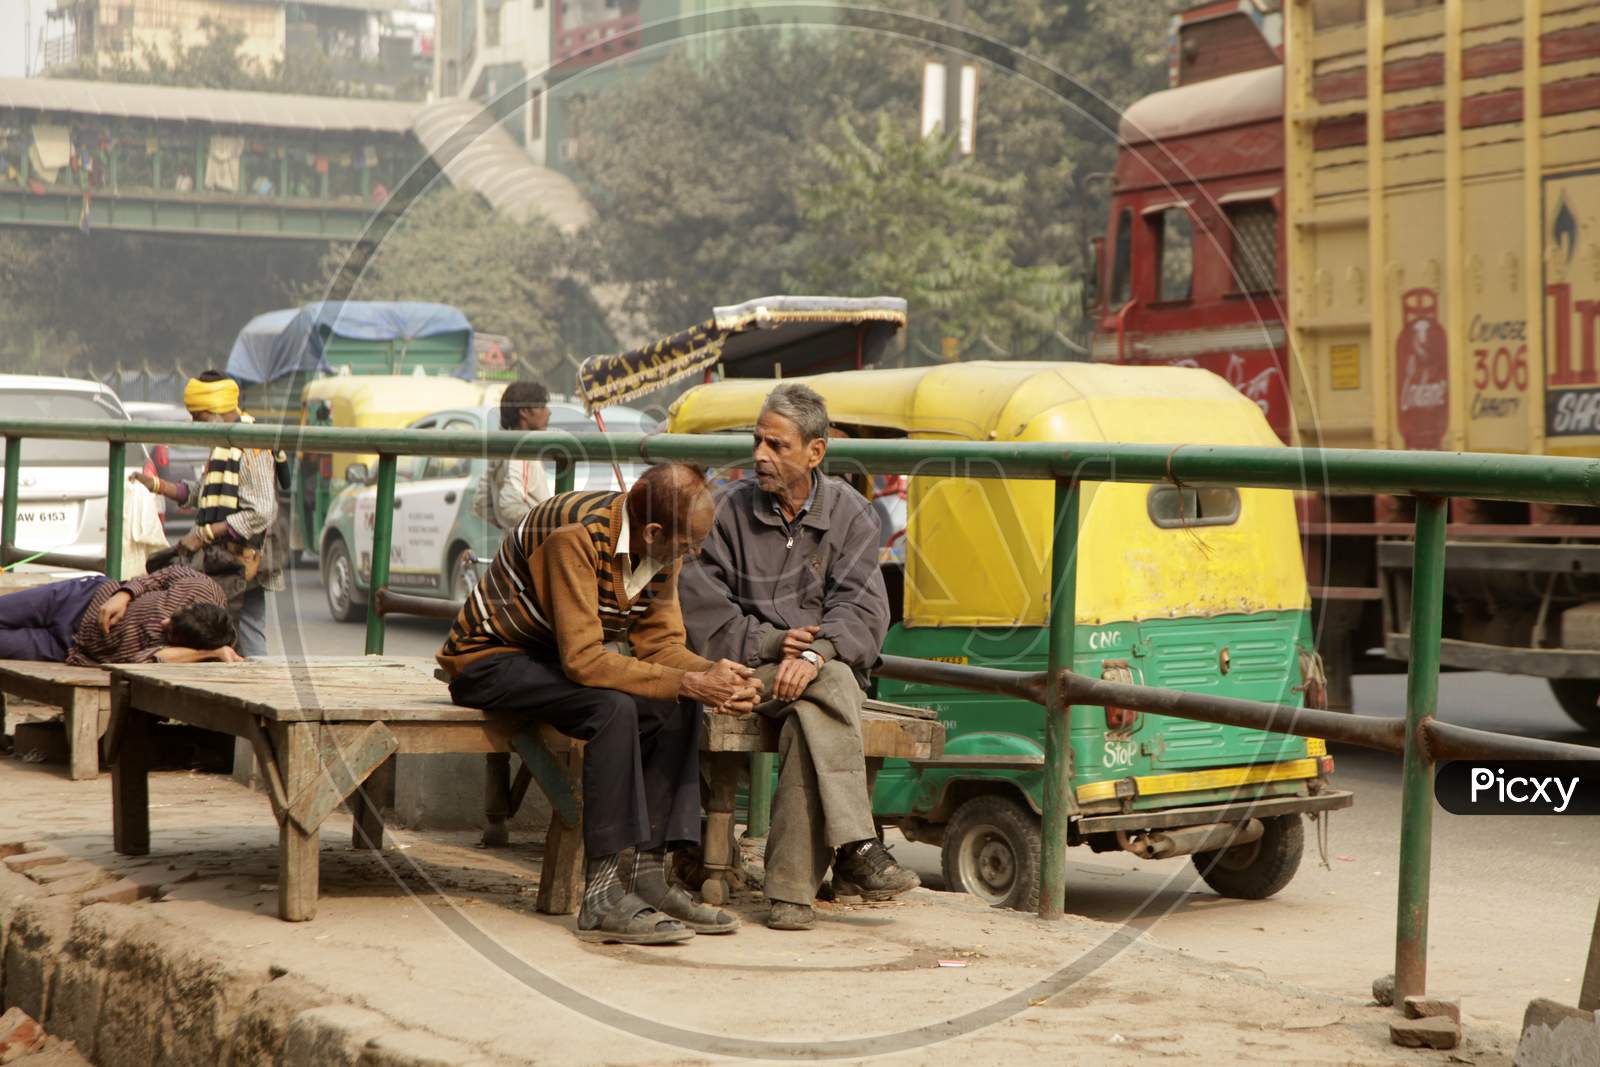 A couple of Old Men's sat alongside a Road